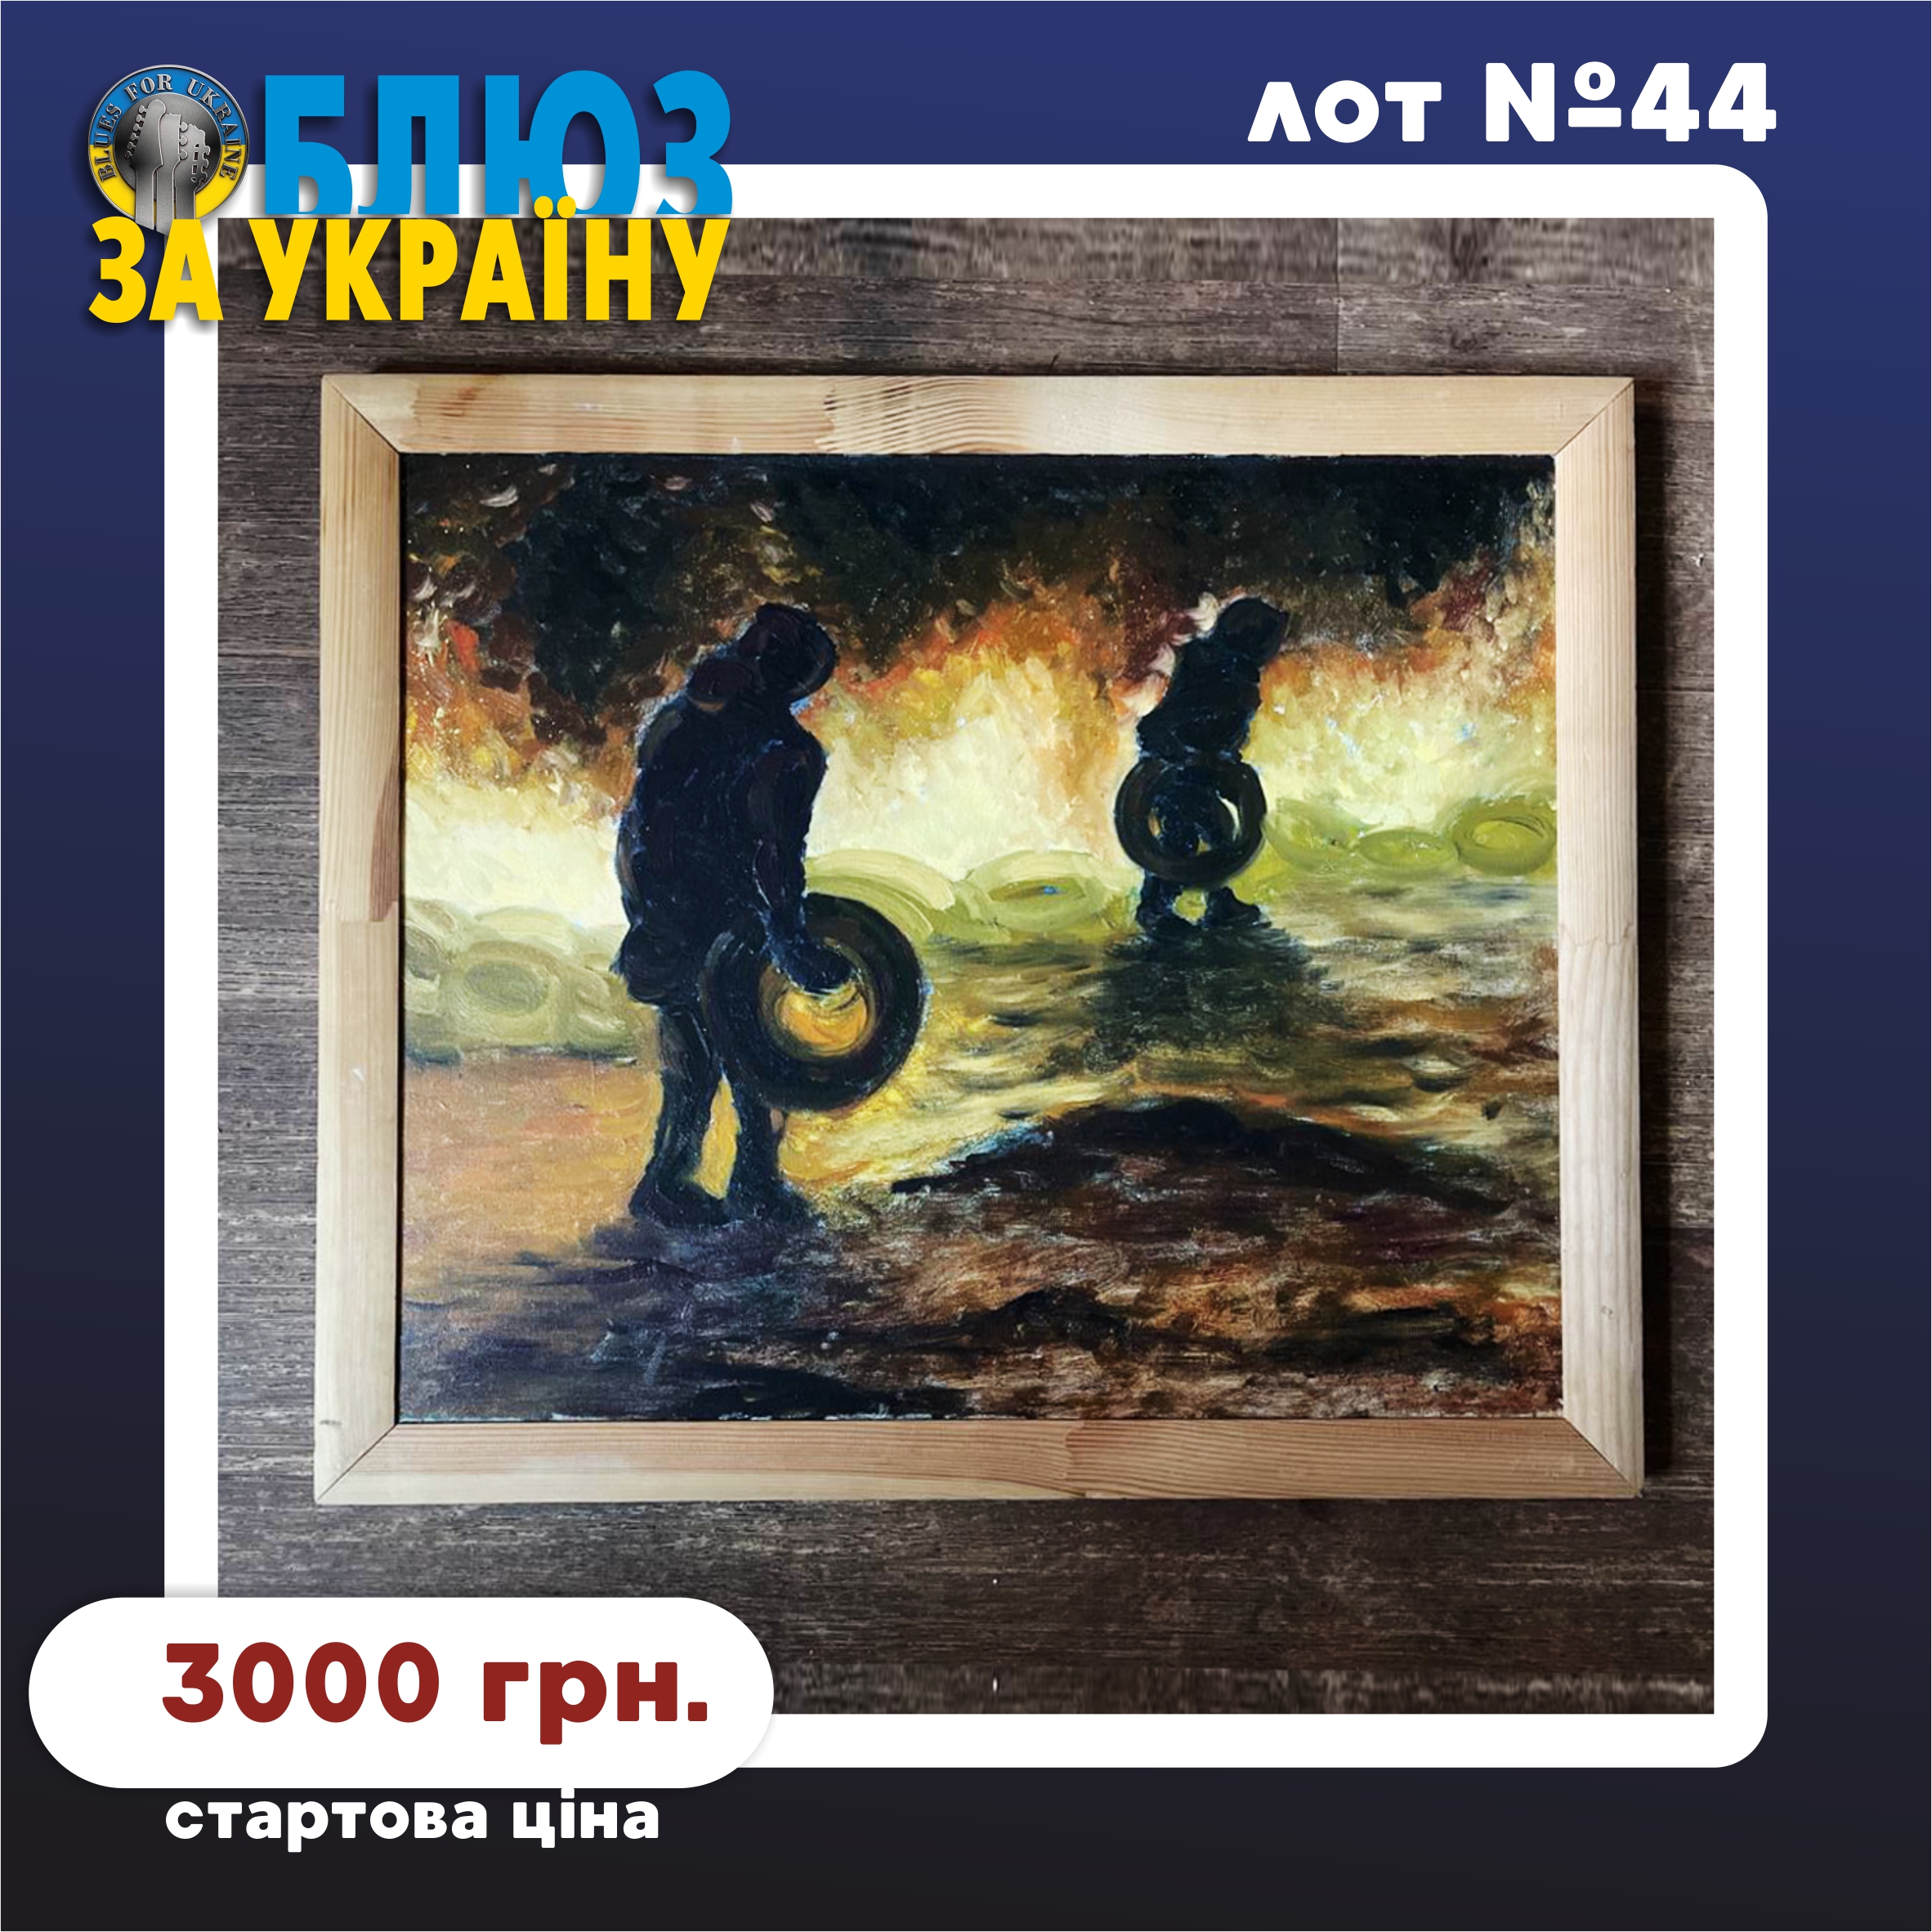 Lot №44. Картина "Україна в огні" (Painting "Ukraine on fire")